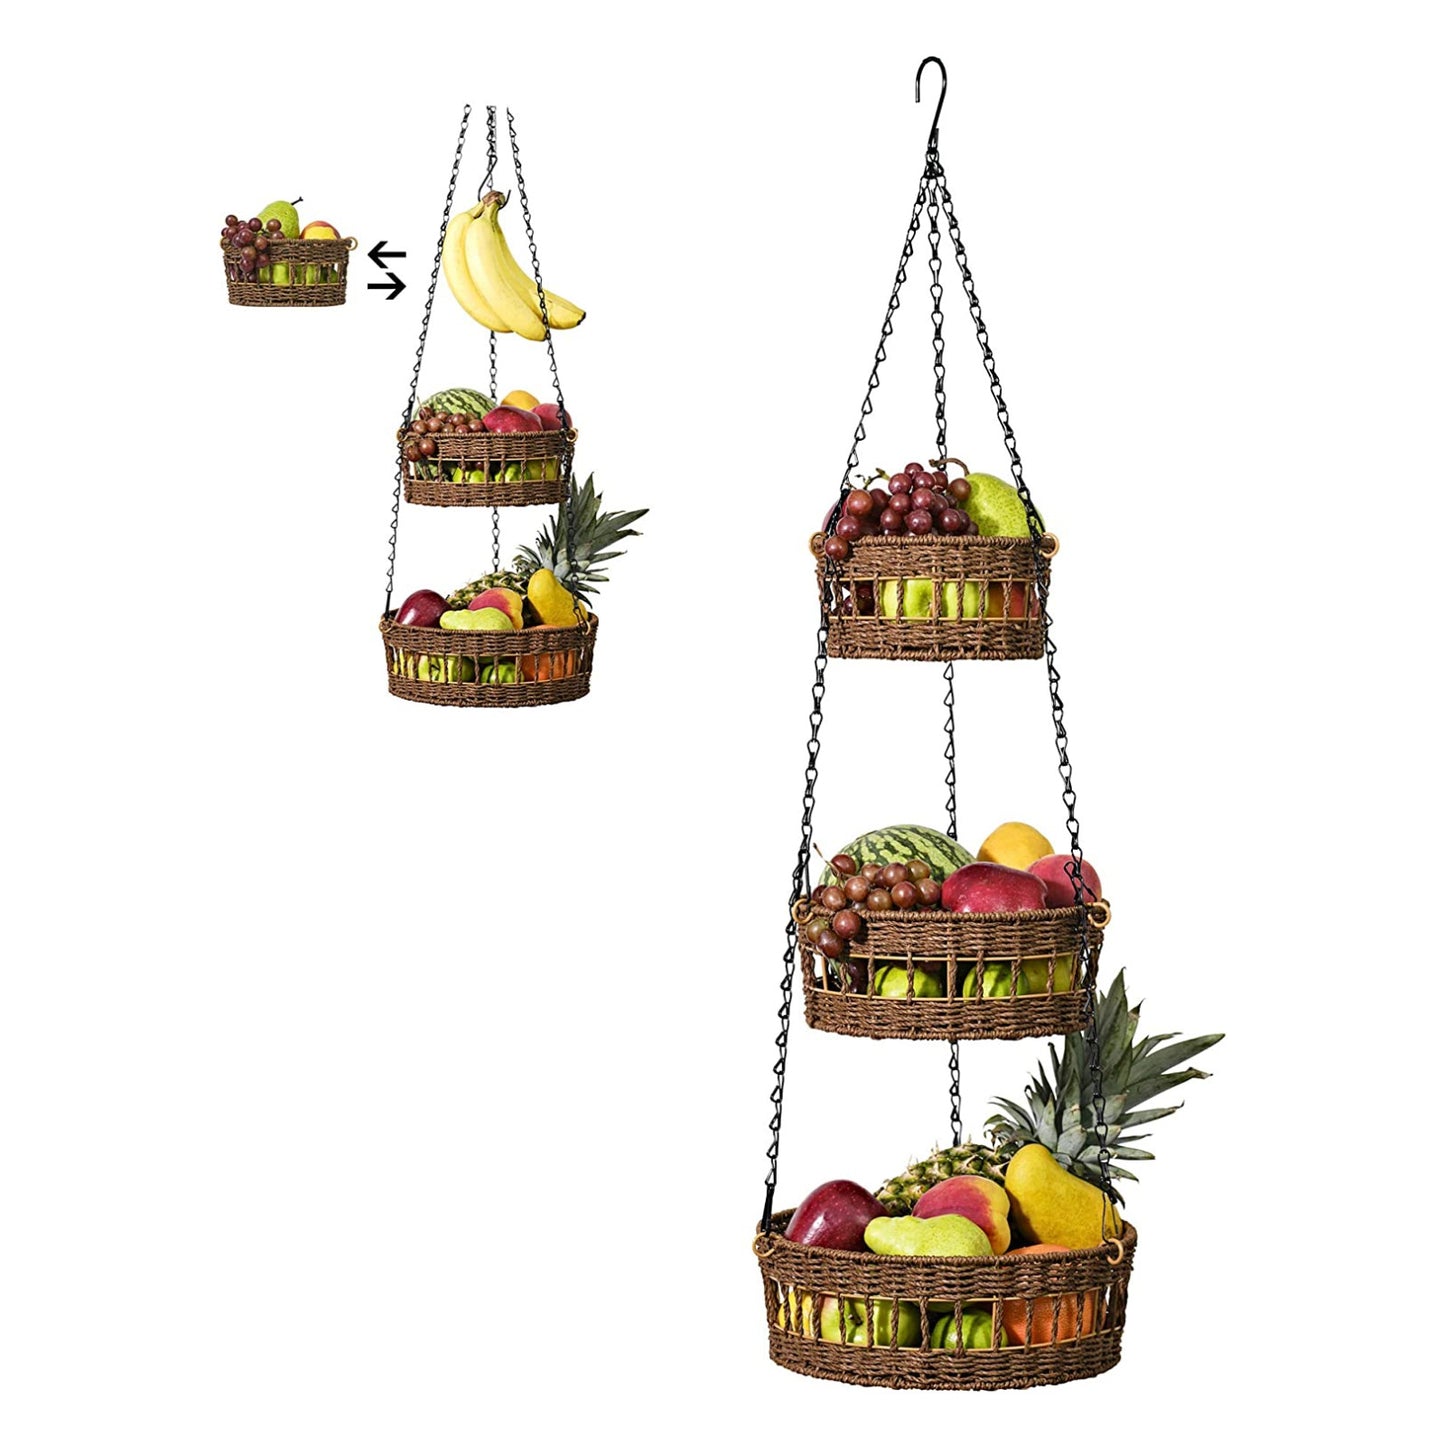 3 Tier Hanging Fruit Basket Wicker Vegetable Storage And Fruit Organizer With Banana Holder